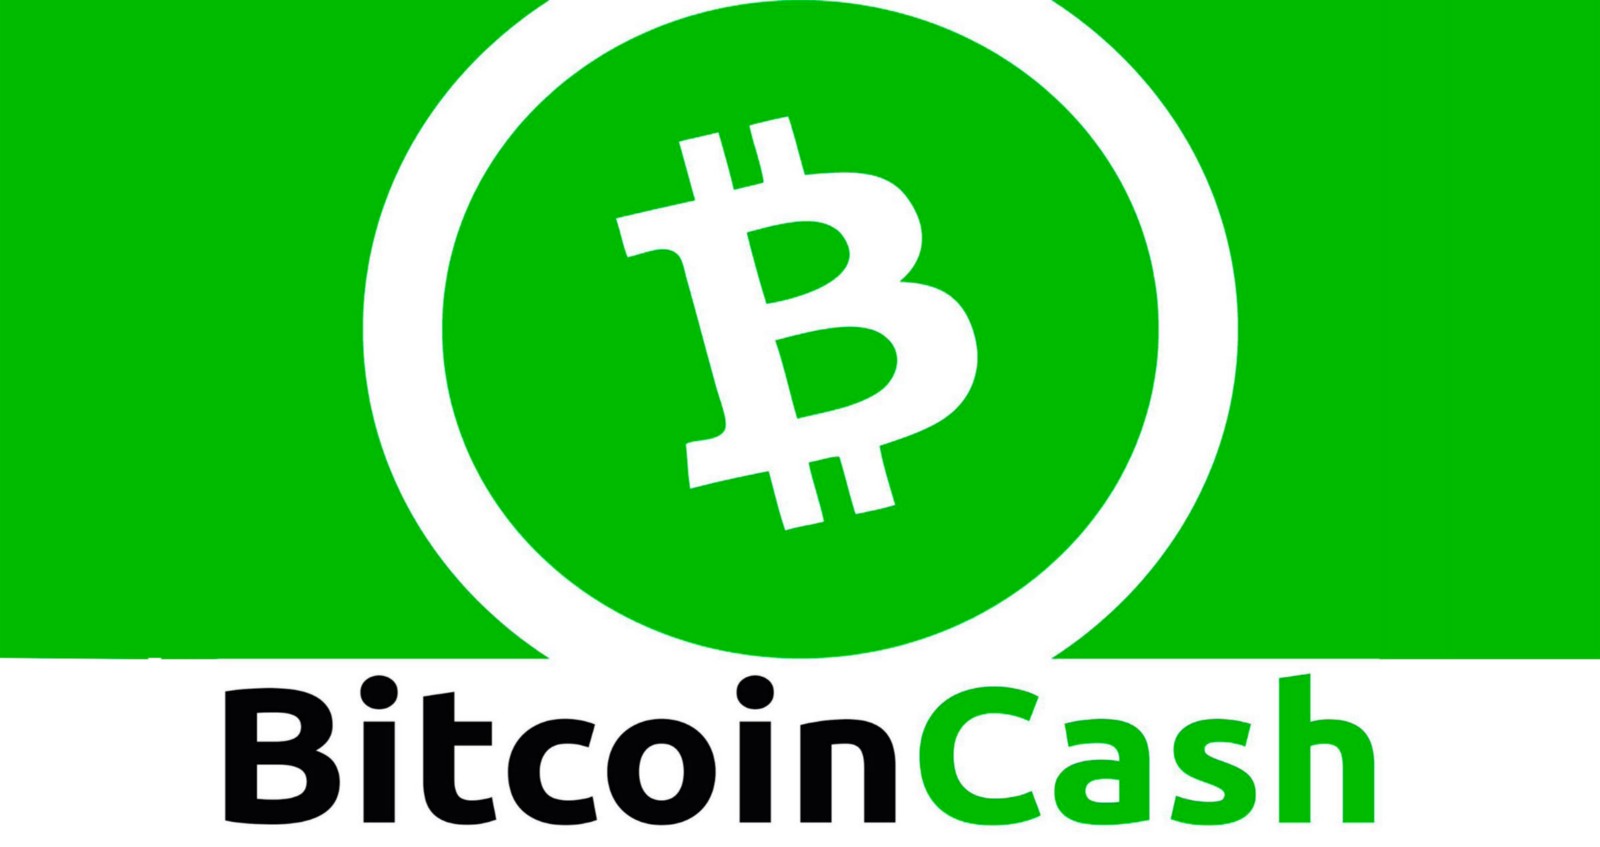 Bitcoin.Com Is Eyeing a Bitcoin Cash Derivative